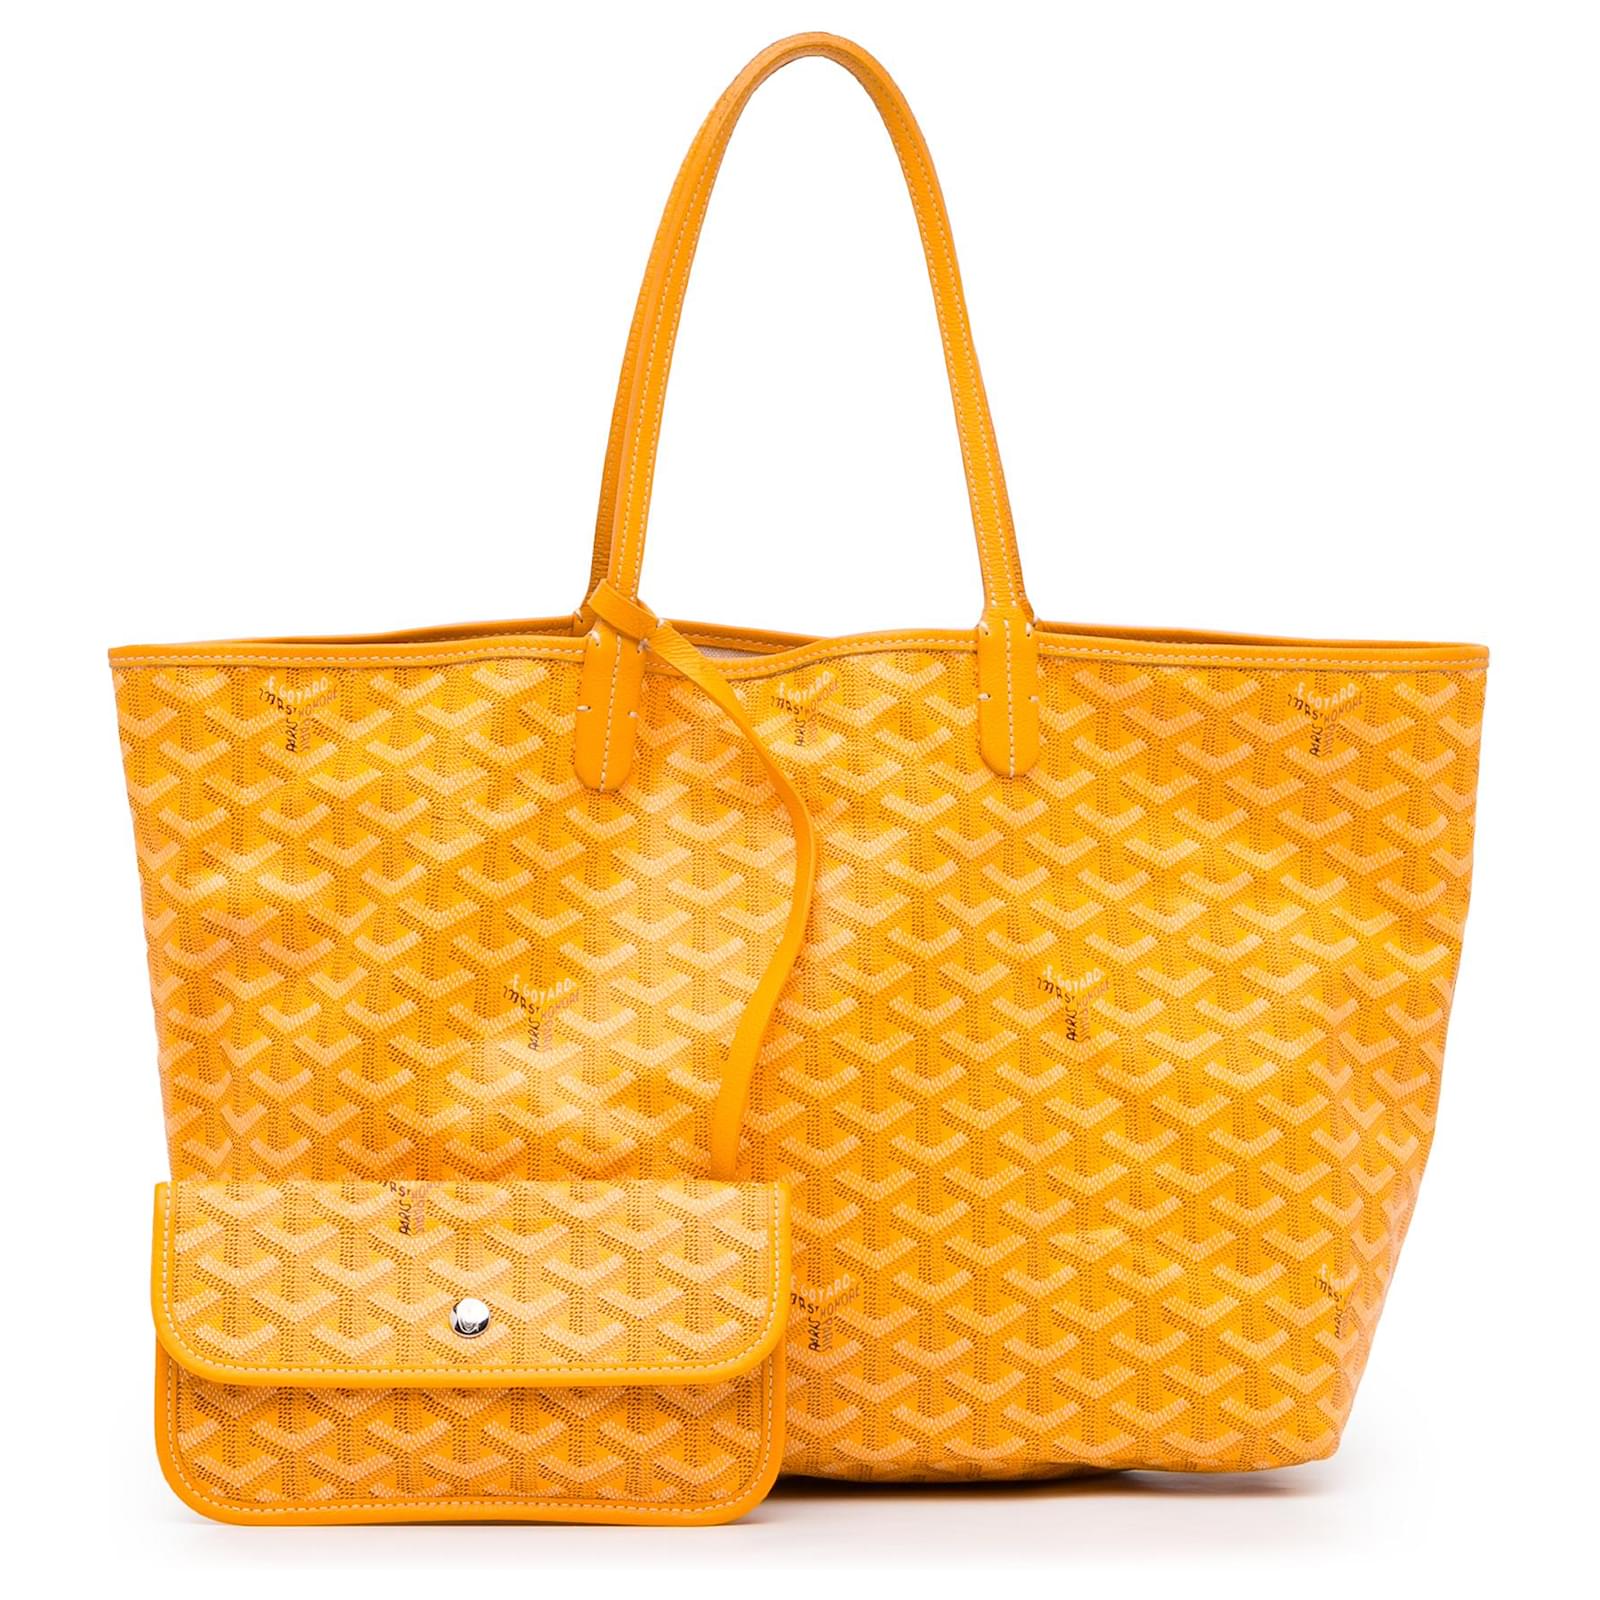 GOYARD Women's Tote bag in Yellow